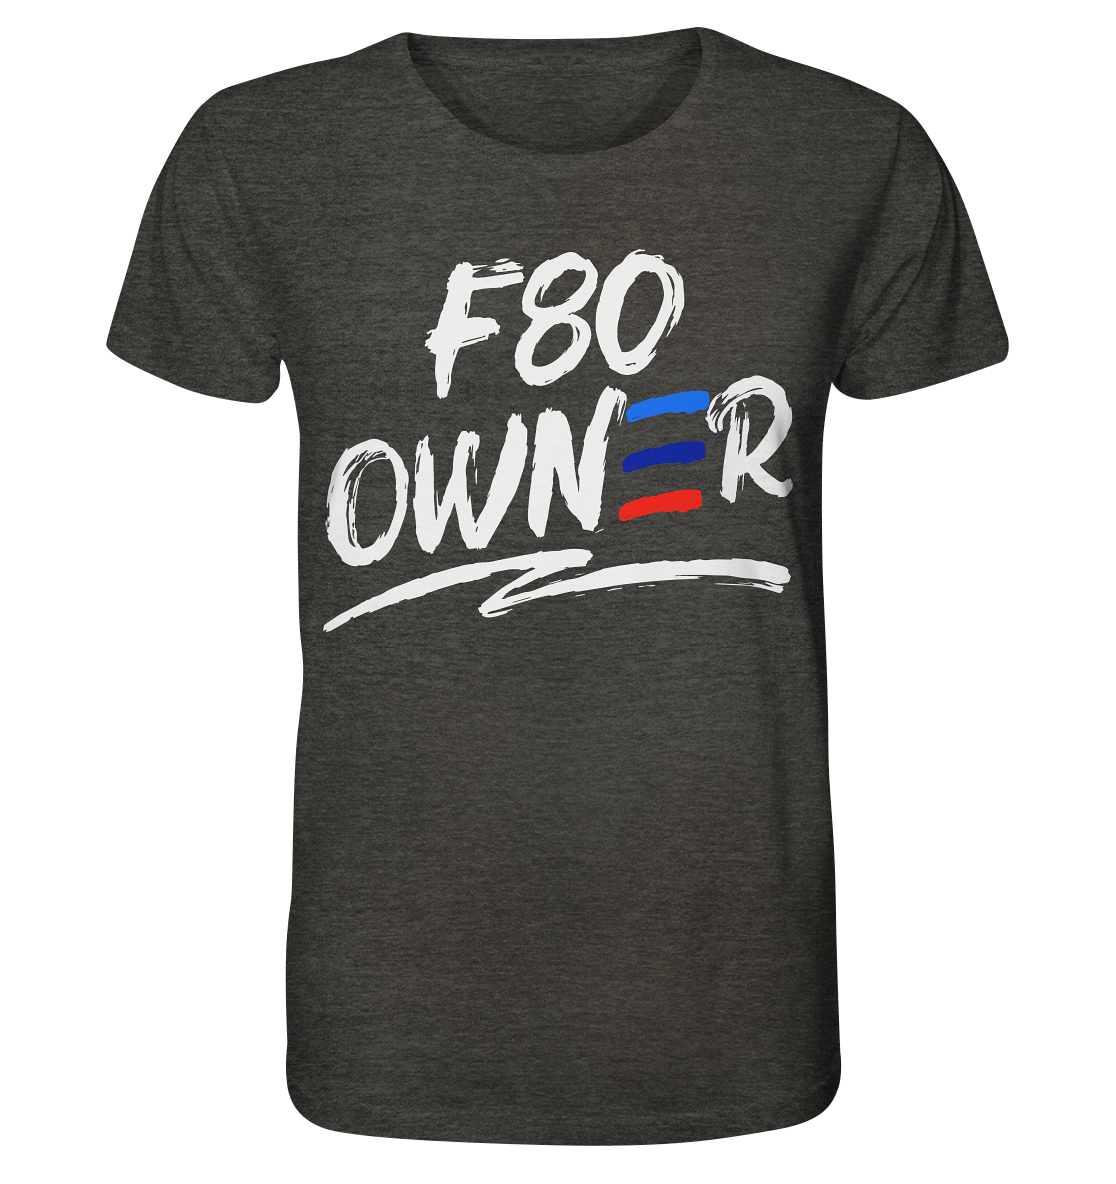 COD_BGKF80OWNER - Organic Shirt (meliert)